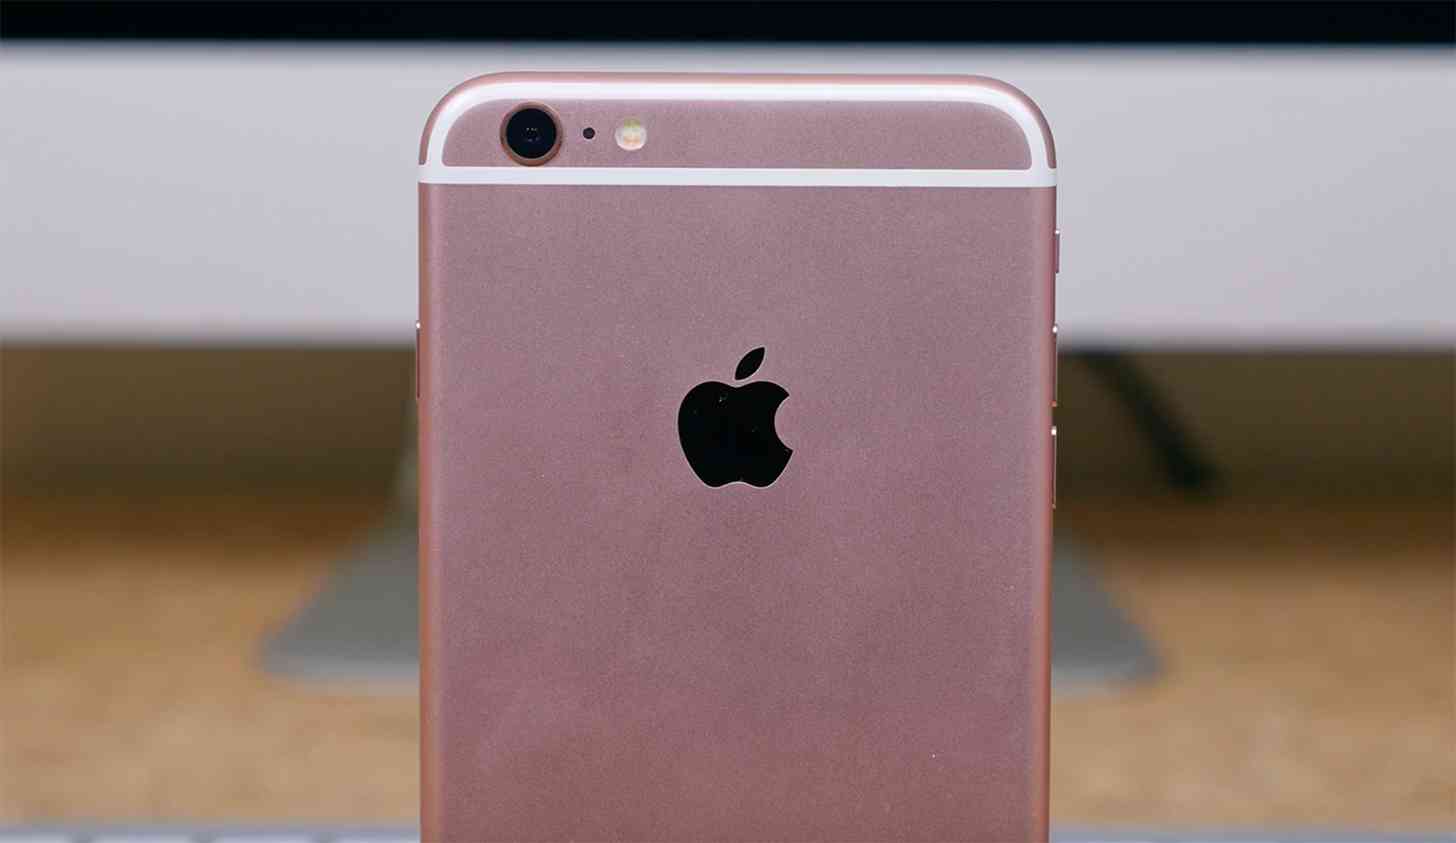 iPhone 6s Plus Rose Gold rear Apple logo